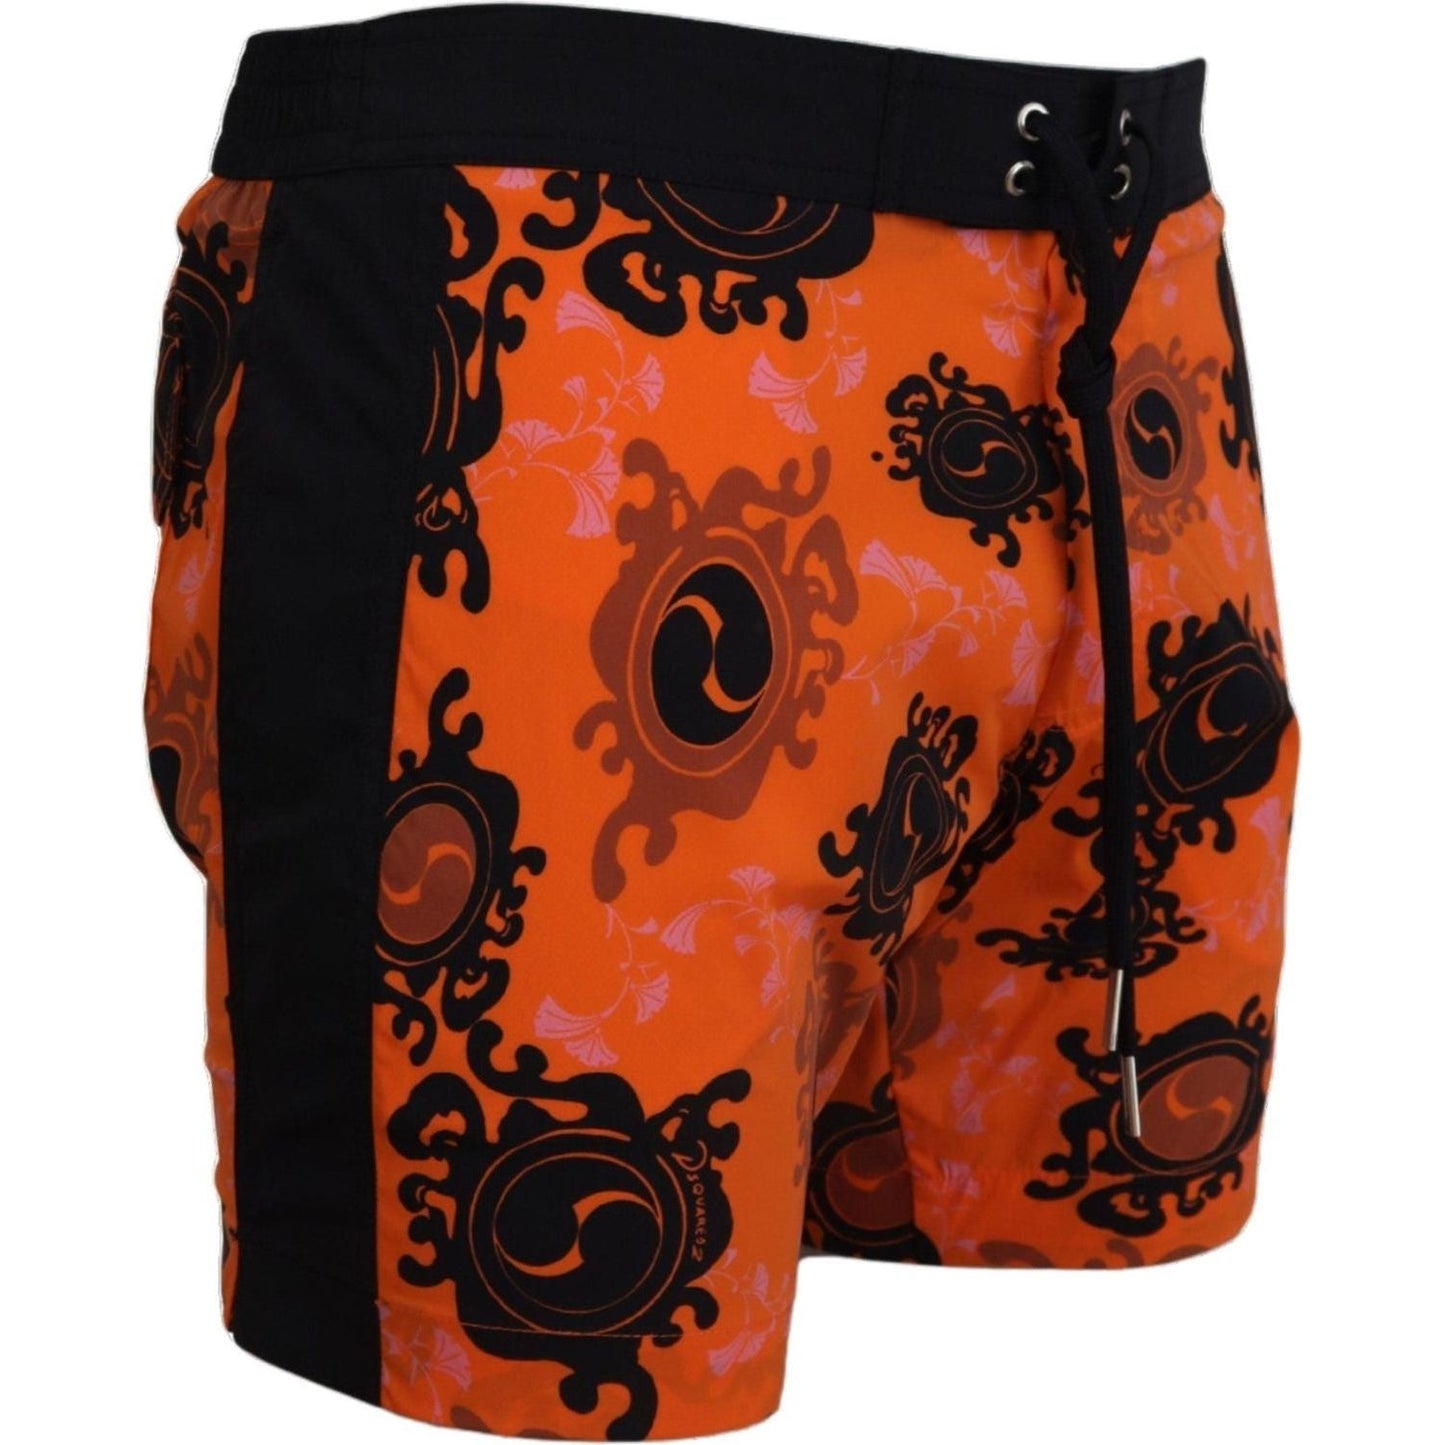 Dsquared² Chic Orange Swim Shorts Boxer for Men orange-black-printed-men-beachwear-shorts-swimwear IMG_6061-8cb541f6-a5e.jpg